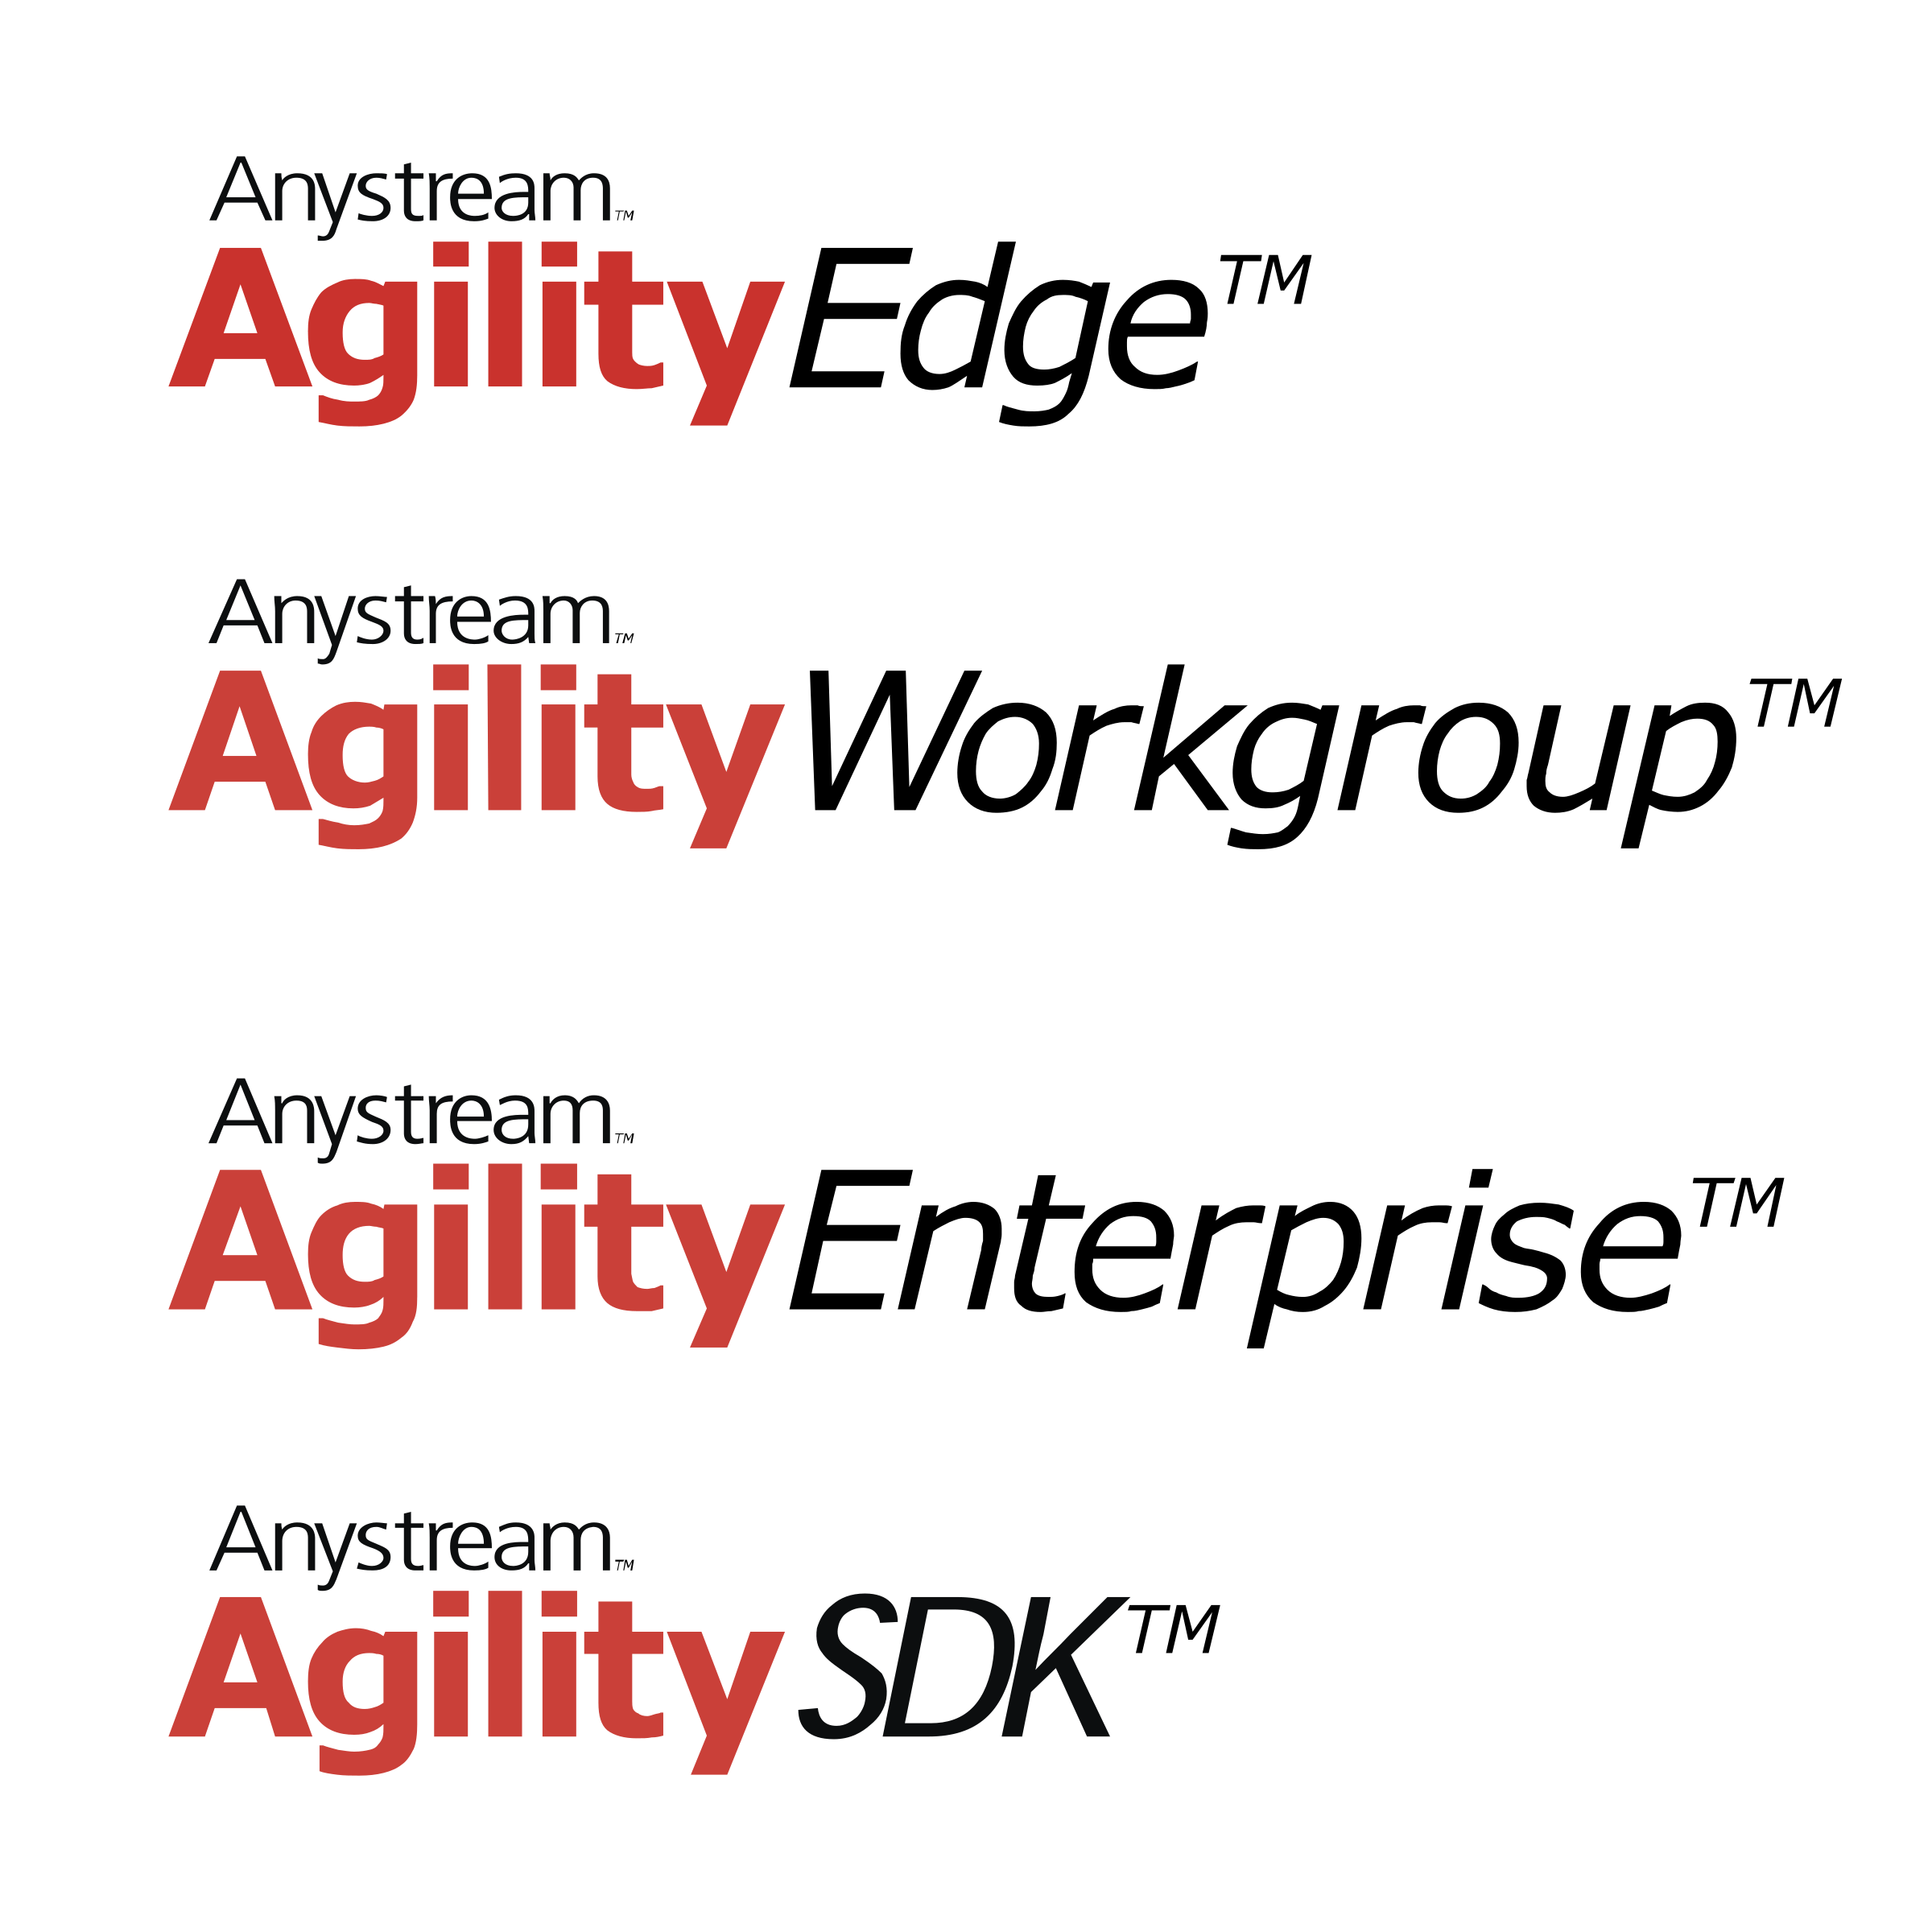 Agility Logo - Agility Logo PNG Transparent & SVG Vector - Freebie Supply